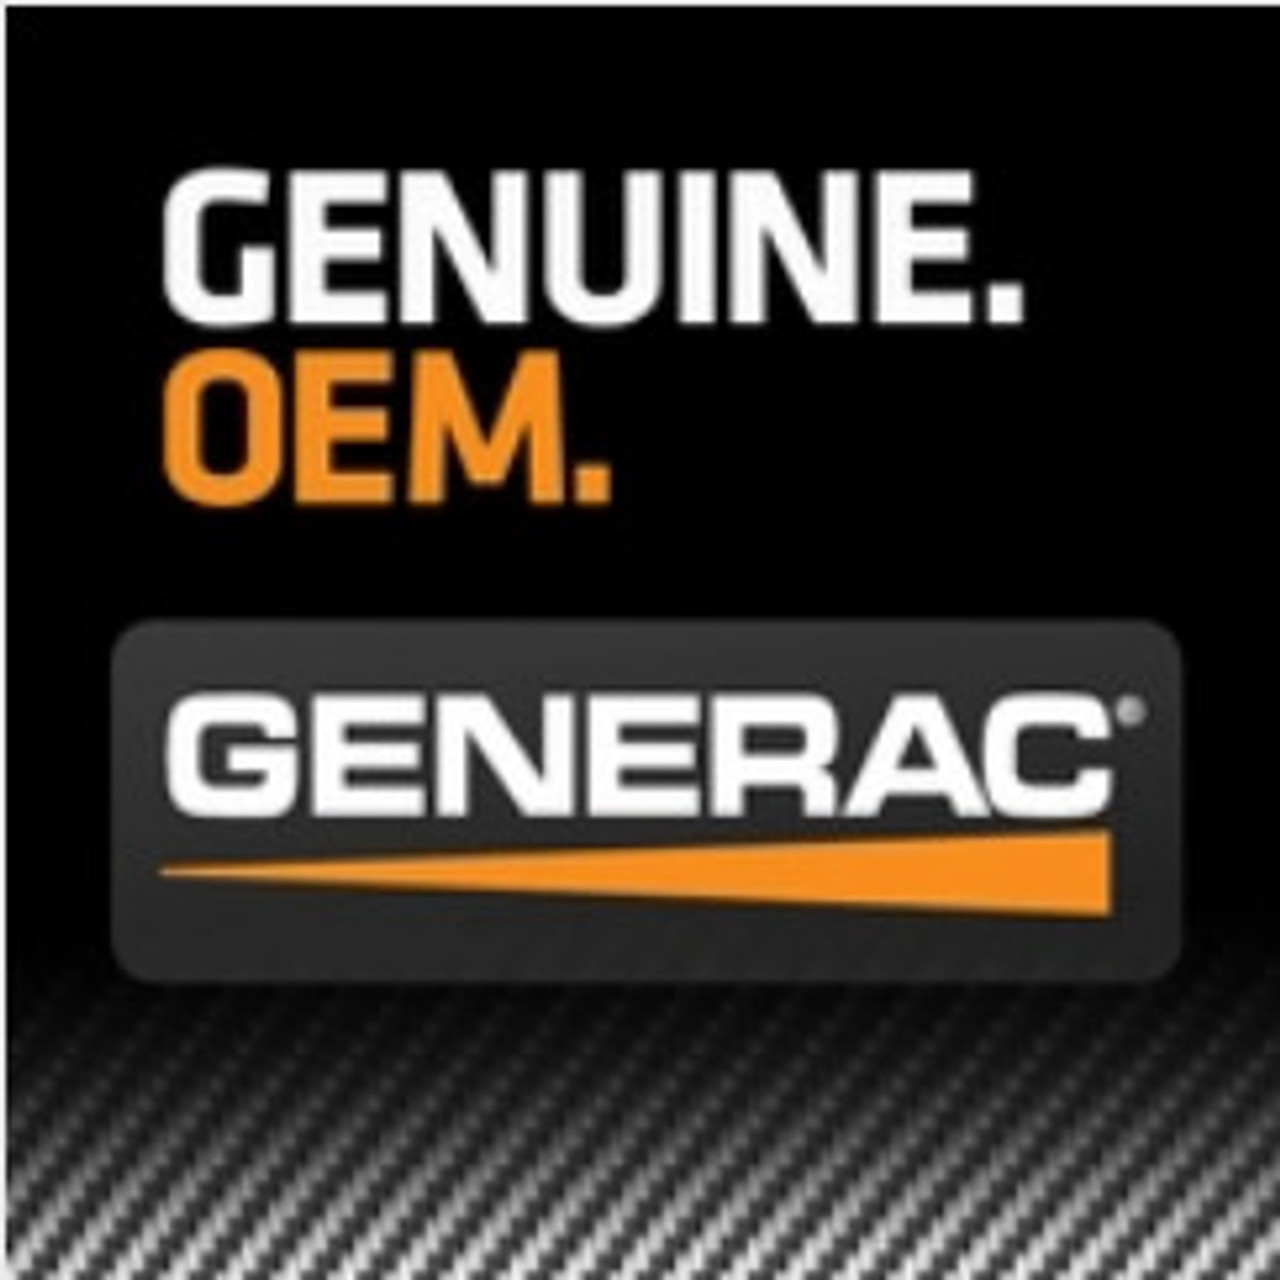 Generac Brand Genuine OEM Parts from Generator Magic